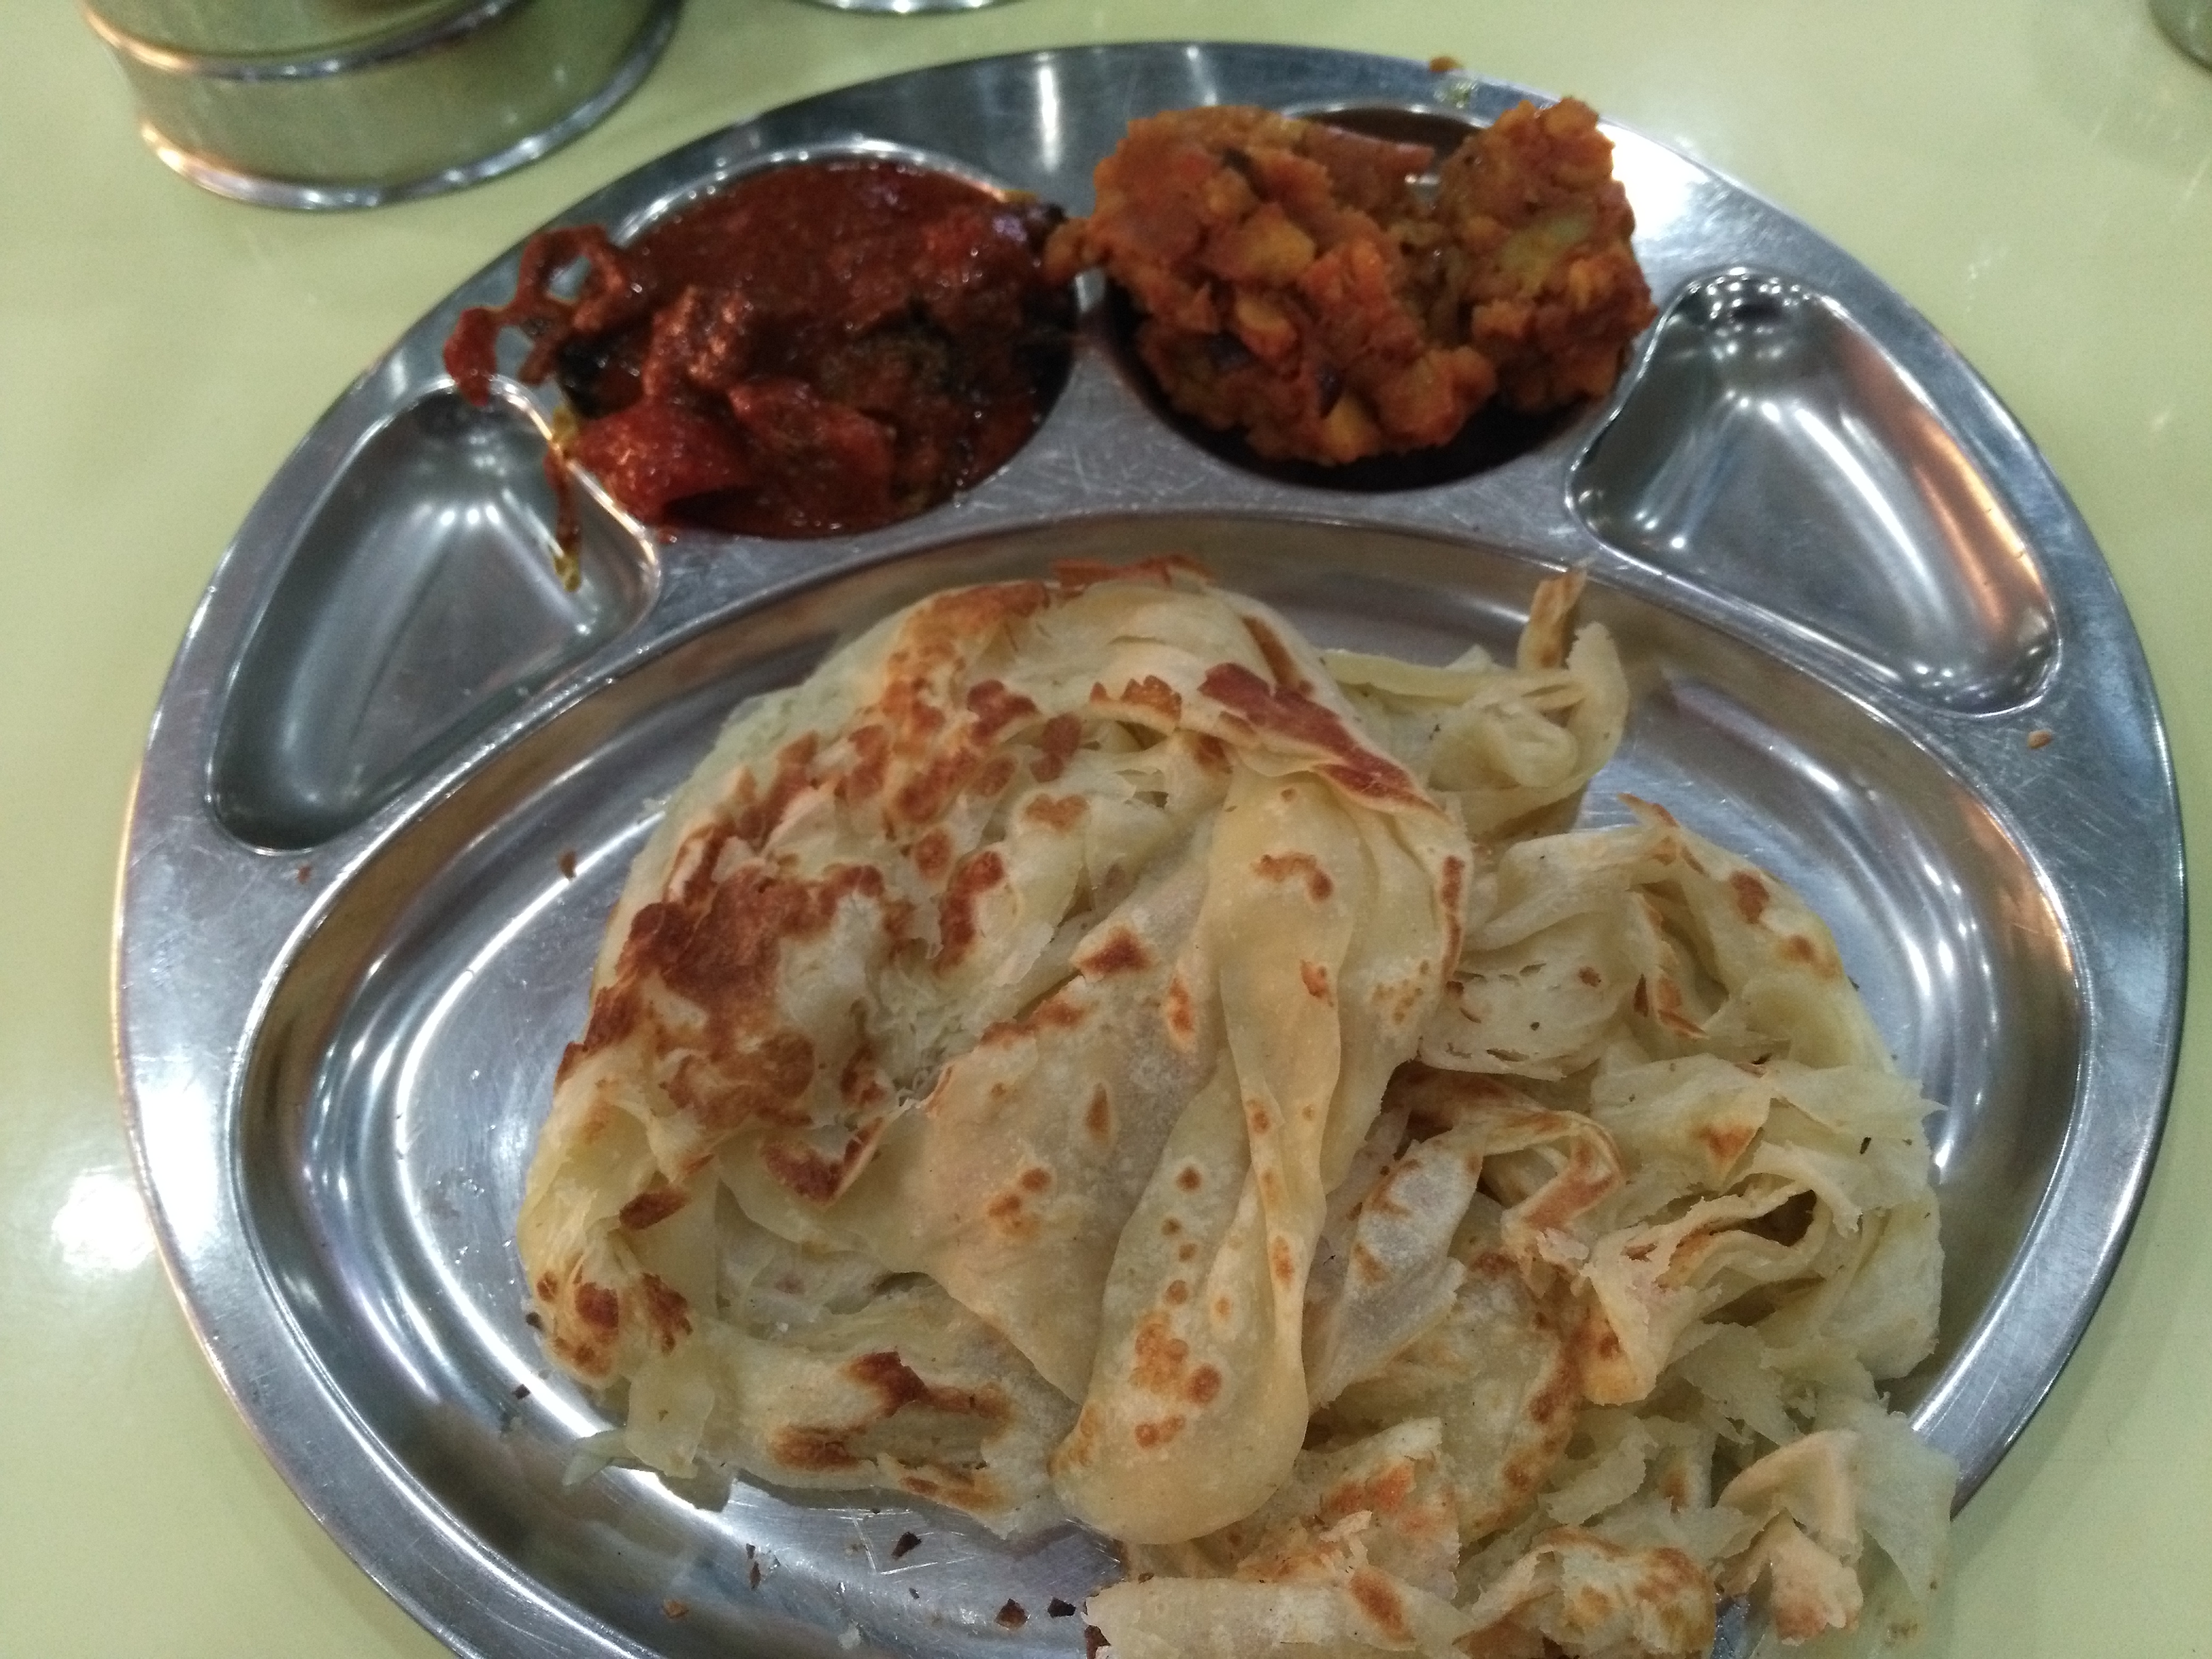 Roti chanai with goat curry and aloo gobi.